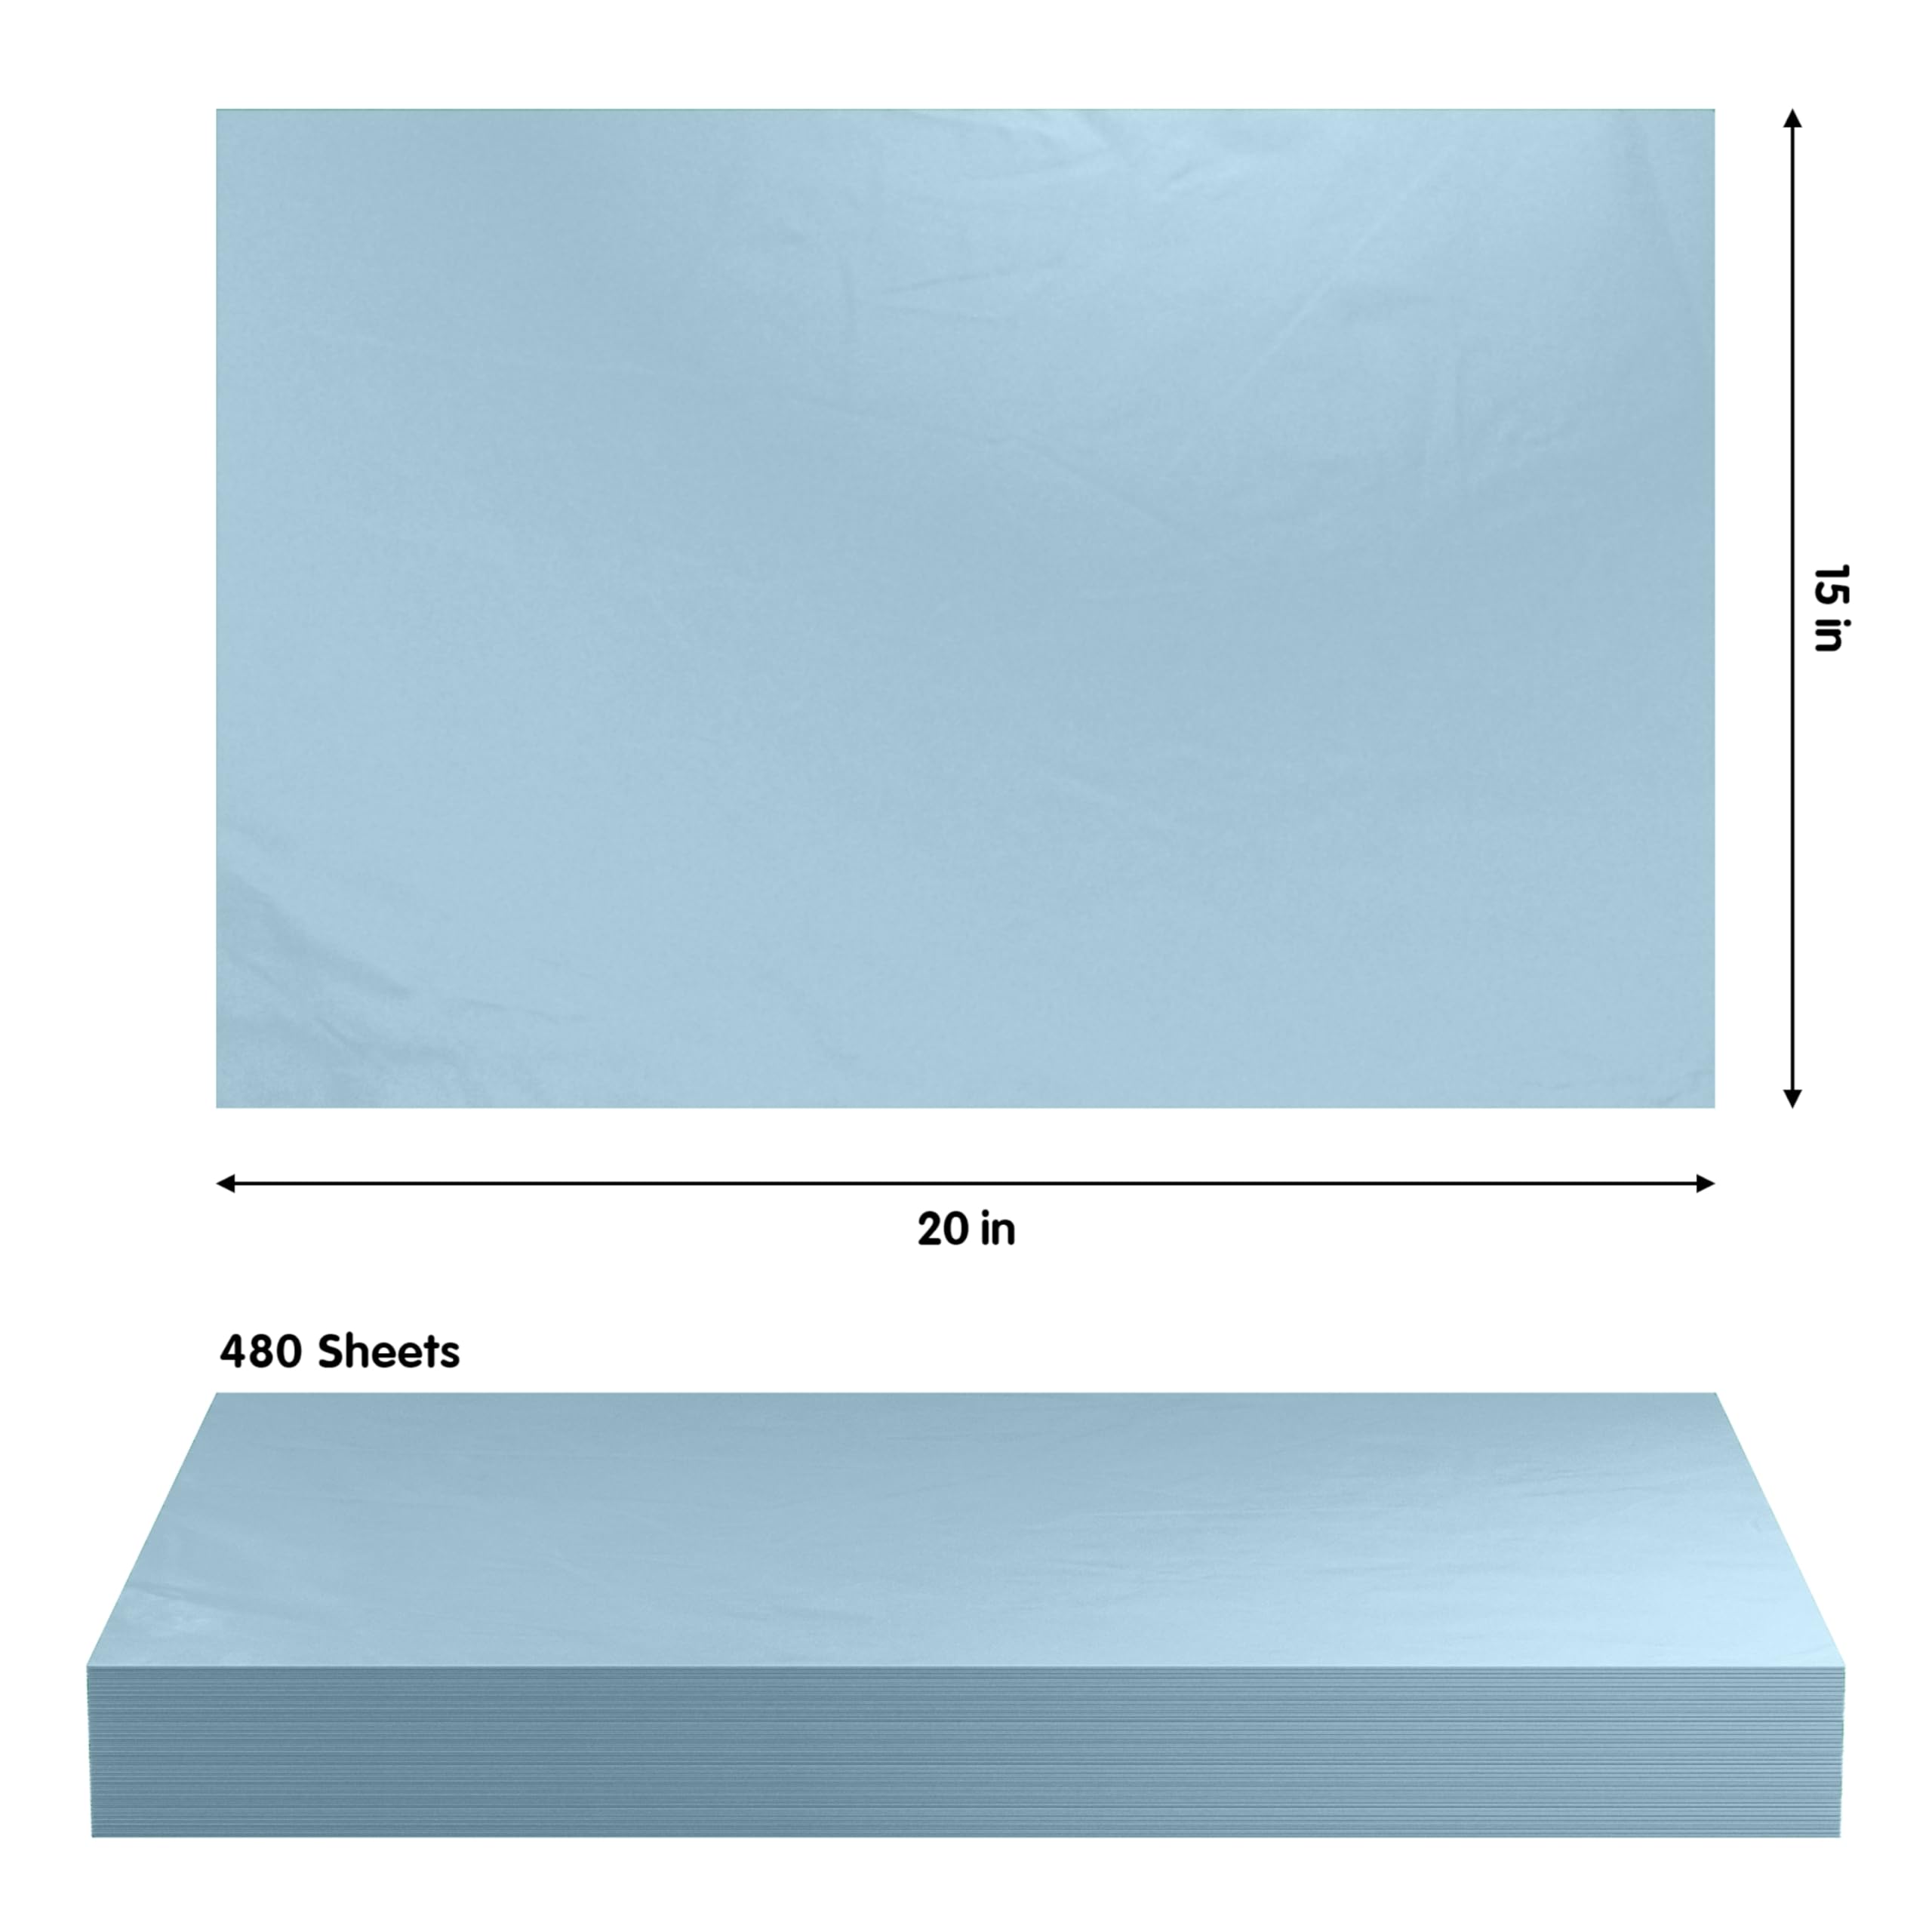 LIGHT BLUE TISSUE REAM 15"X 20"- 480 SHEETS